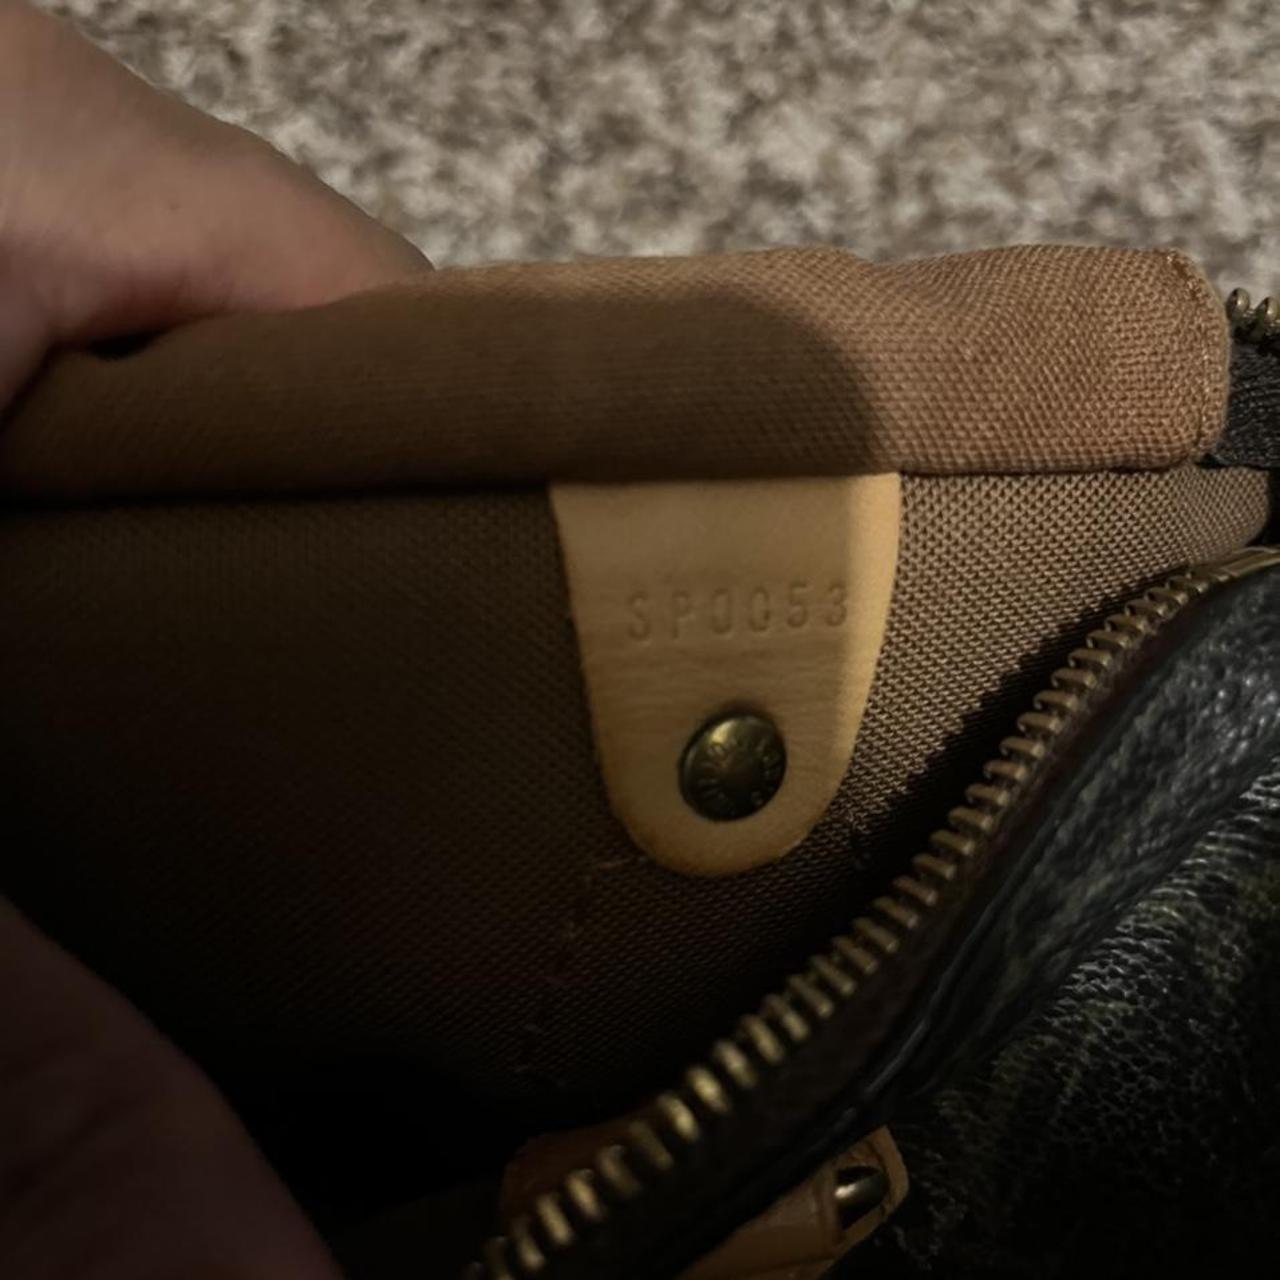 Louis Vuitton Shopping Bag. *JUST THE BAG* Smudged - Depop